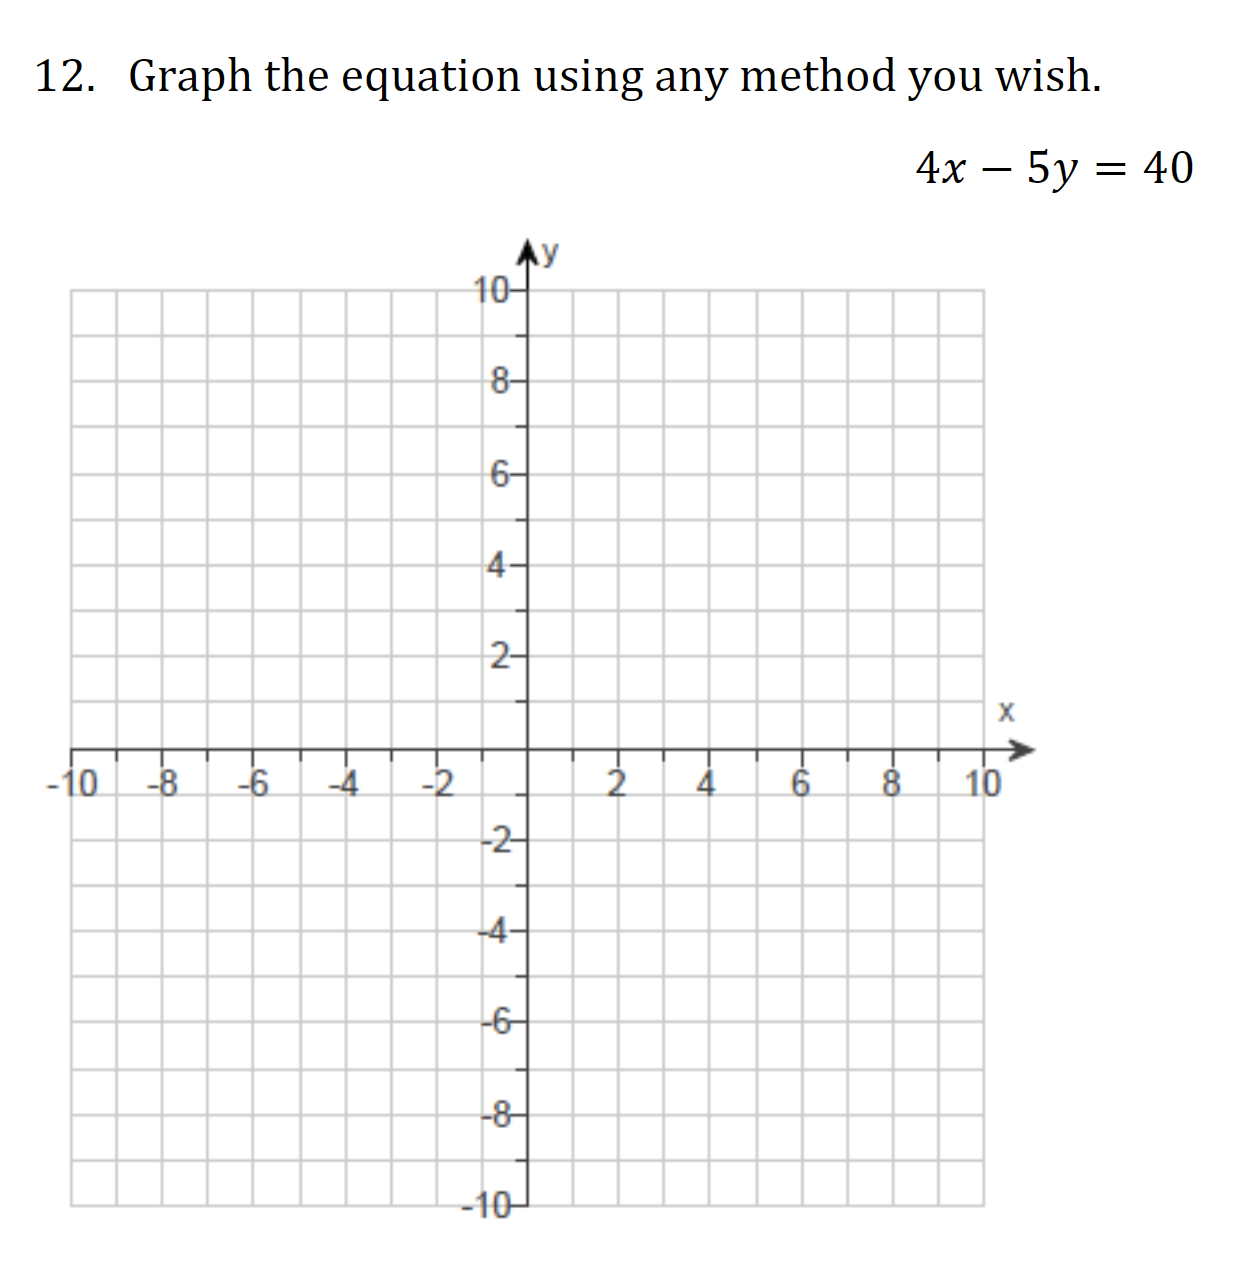 . Graph the equation using any method you wish.
4х — 5у — 40
Ay
10-
8-
6-
4-
2-
O -8
-6
-4
-2
6
8
10
2
-4-
-6
-8-
-10-
4.
